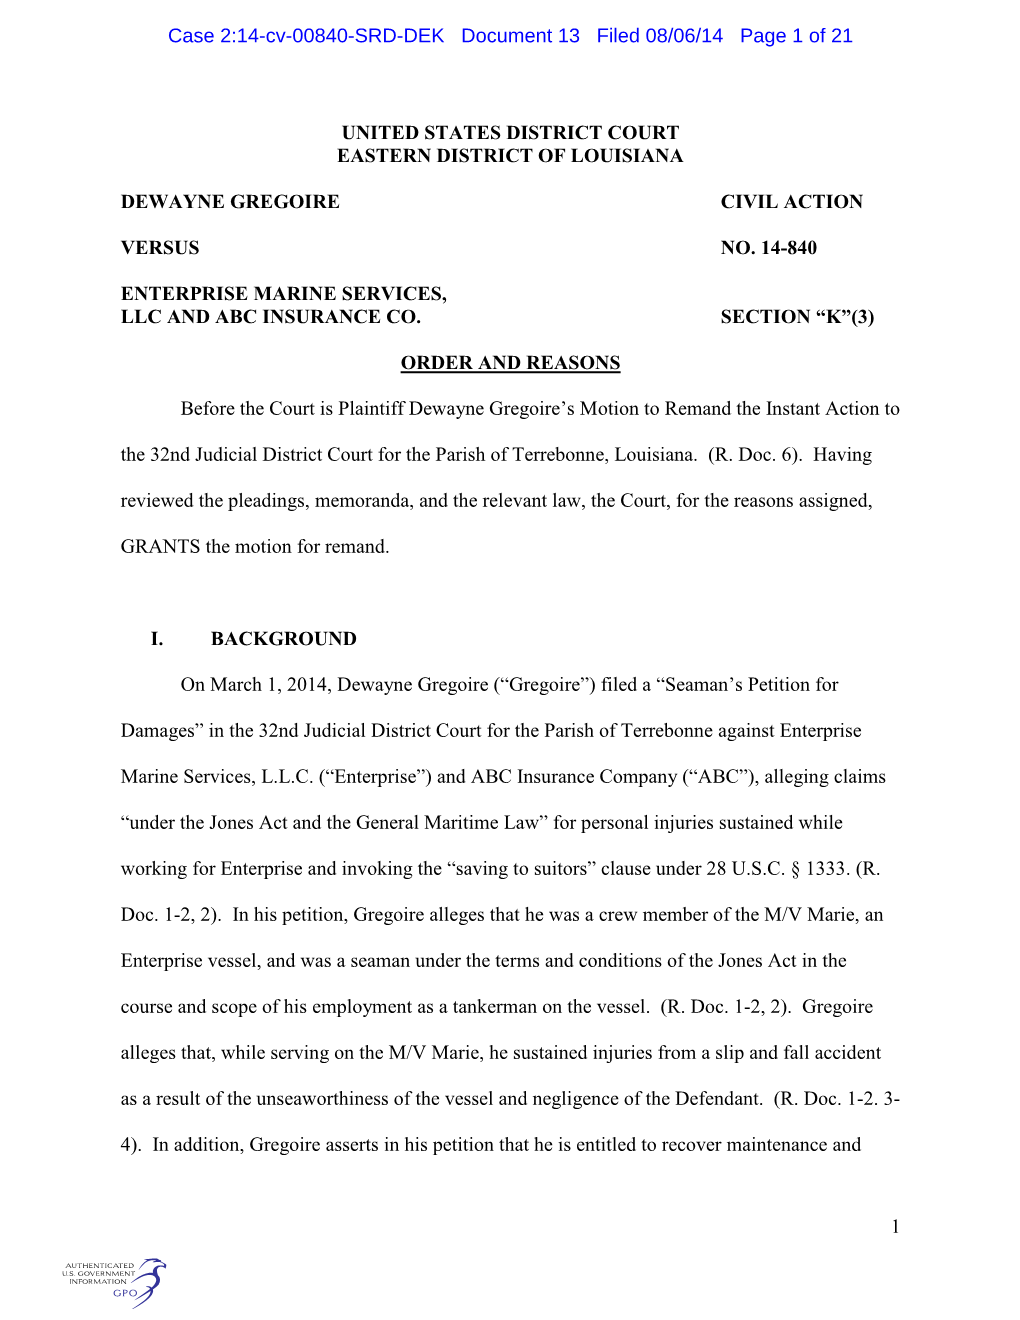 1 United States District Court Eastern District of Louisiana Dewayne Gregoire Civil Action Versus No. 14-840 Enterprise Marine